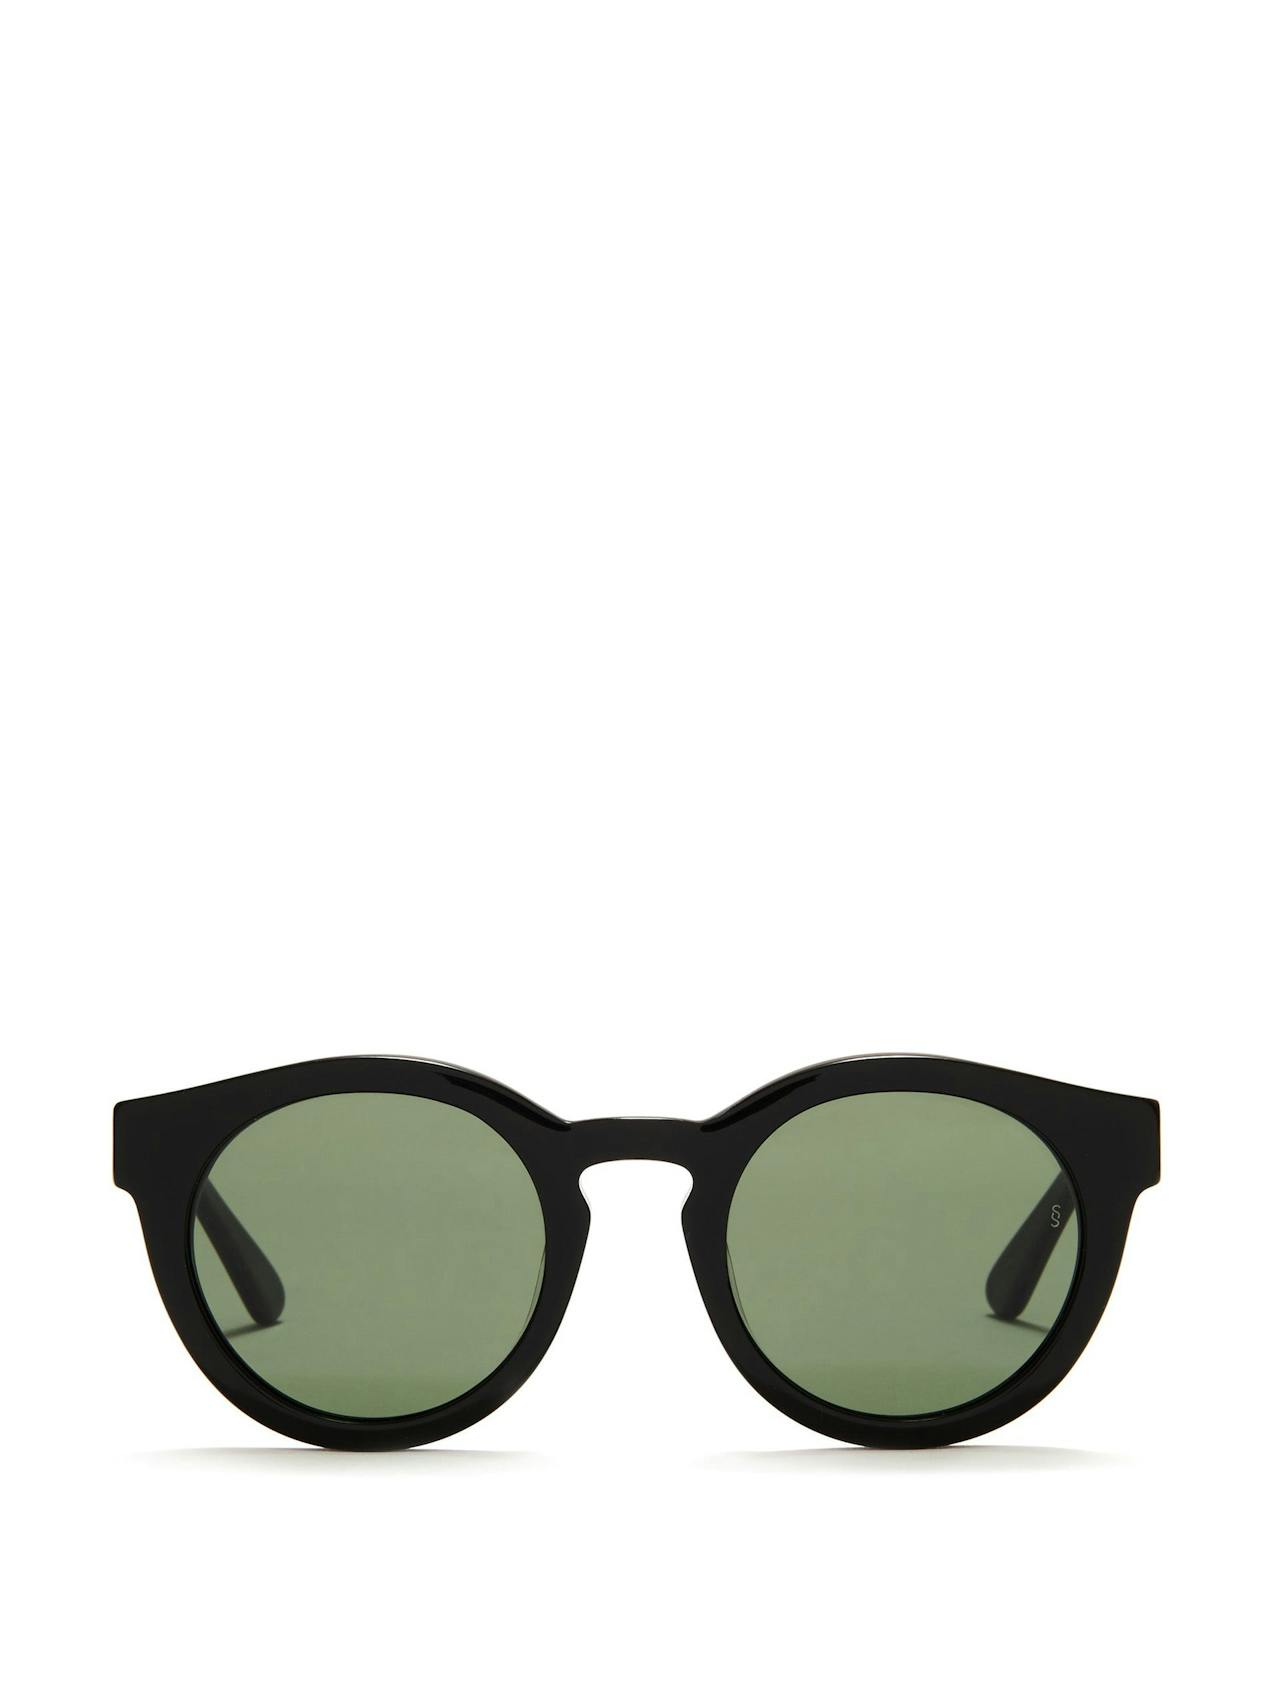 Black Soelae sunglasses